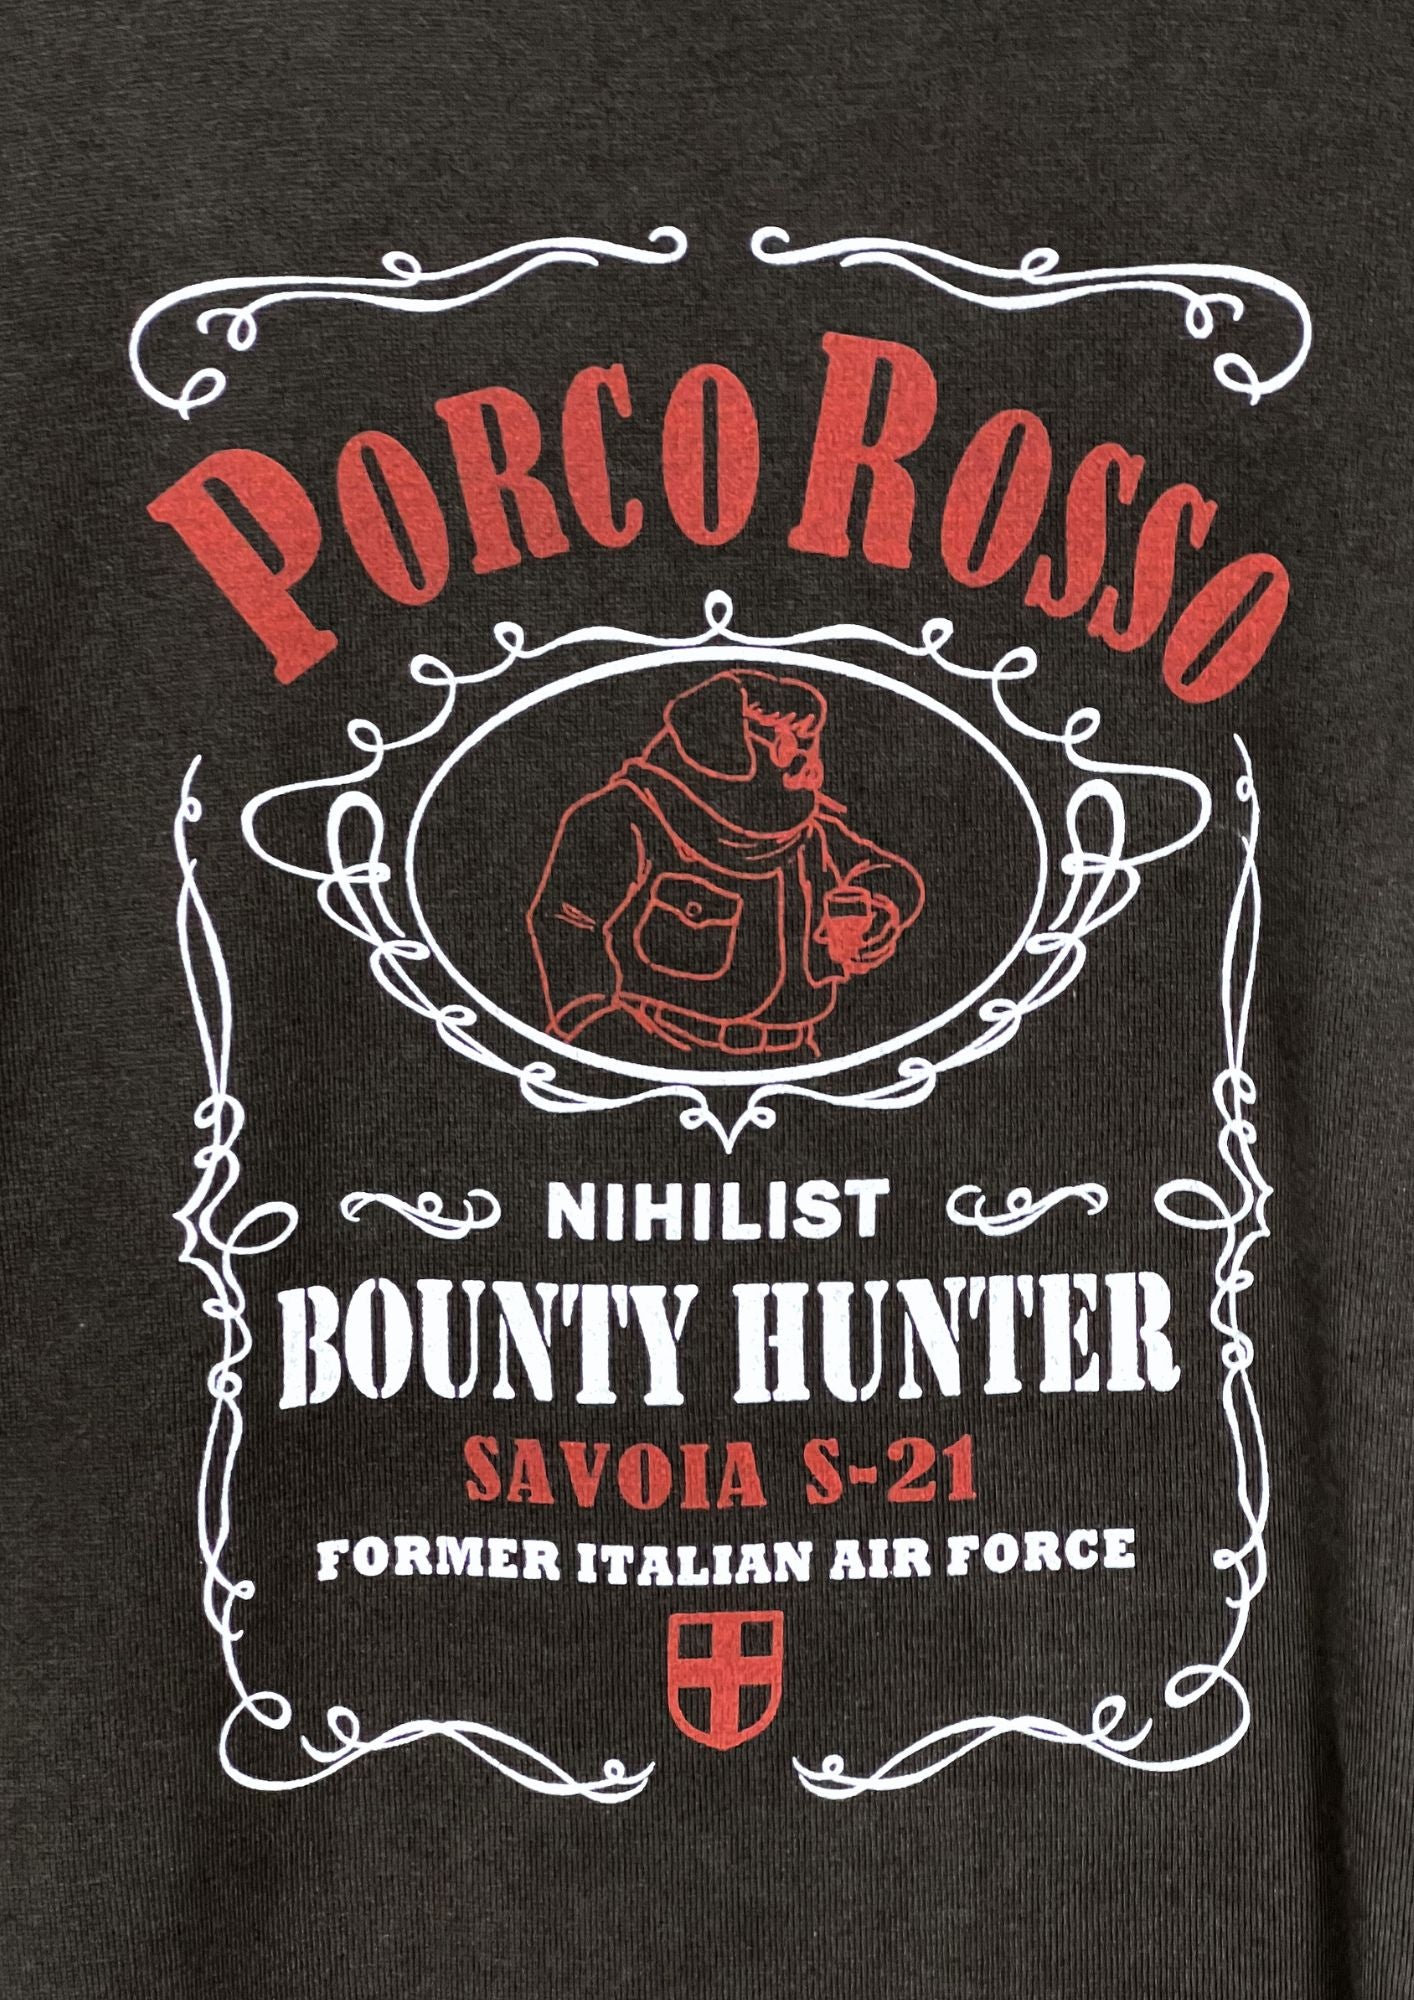 2021 Porco Rosso x GBL Bounty Hunter T-shirt